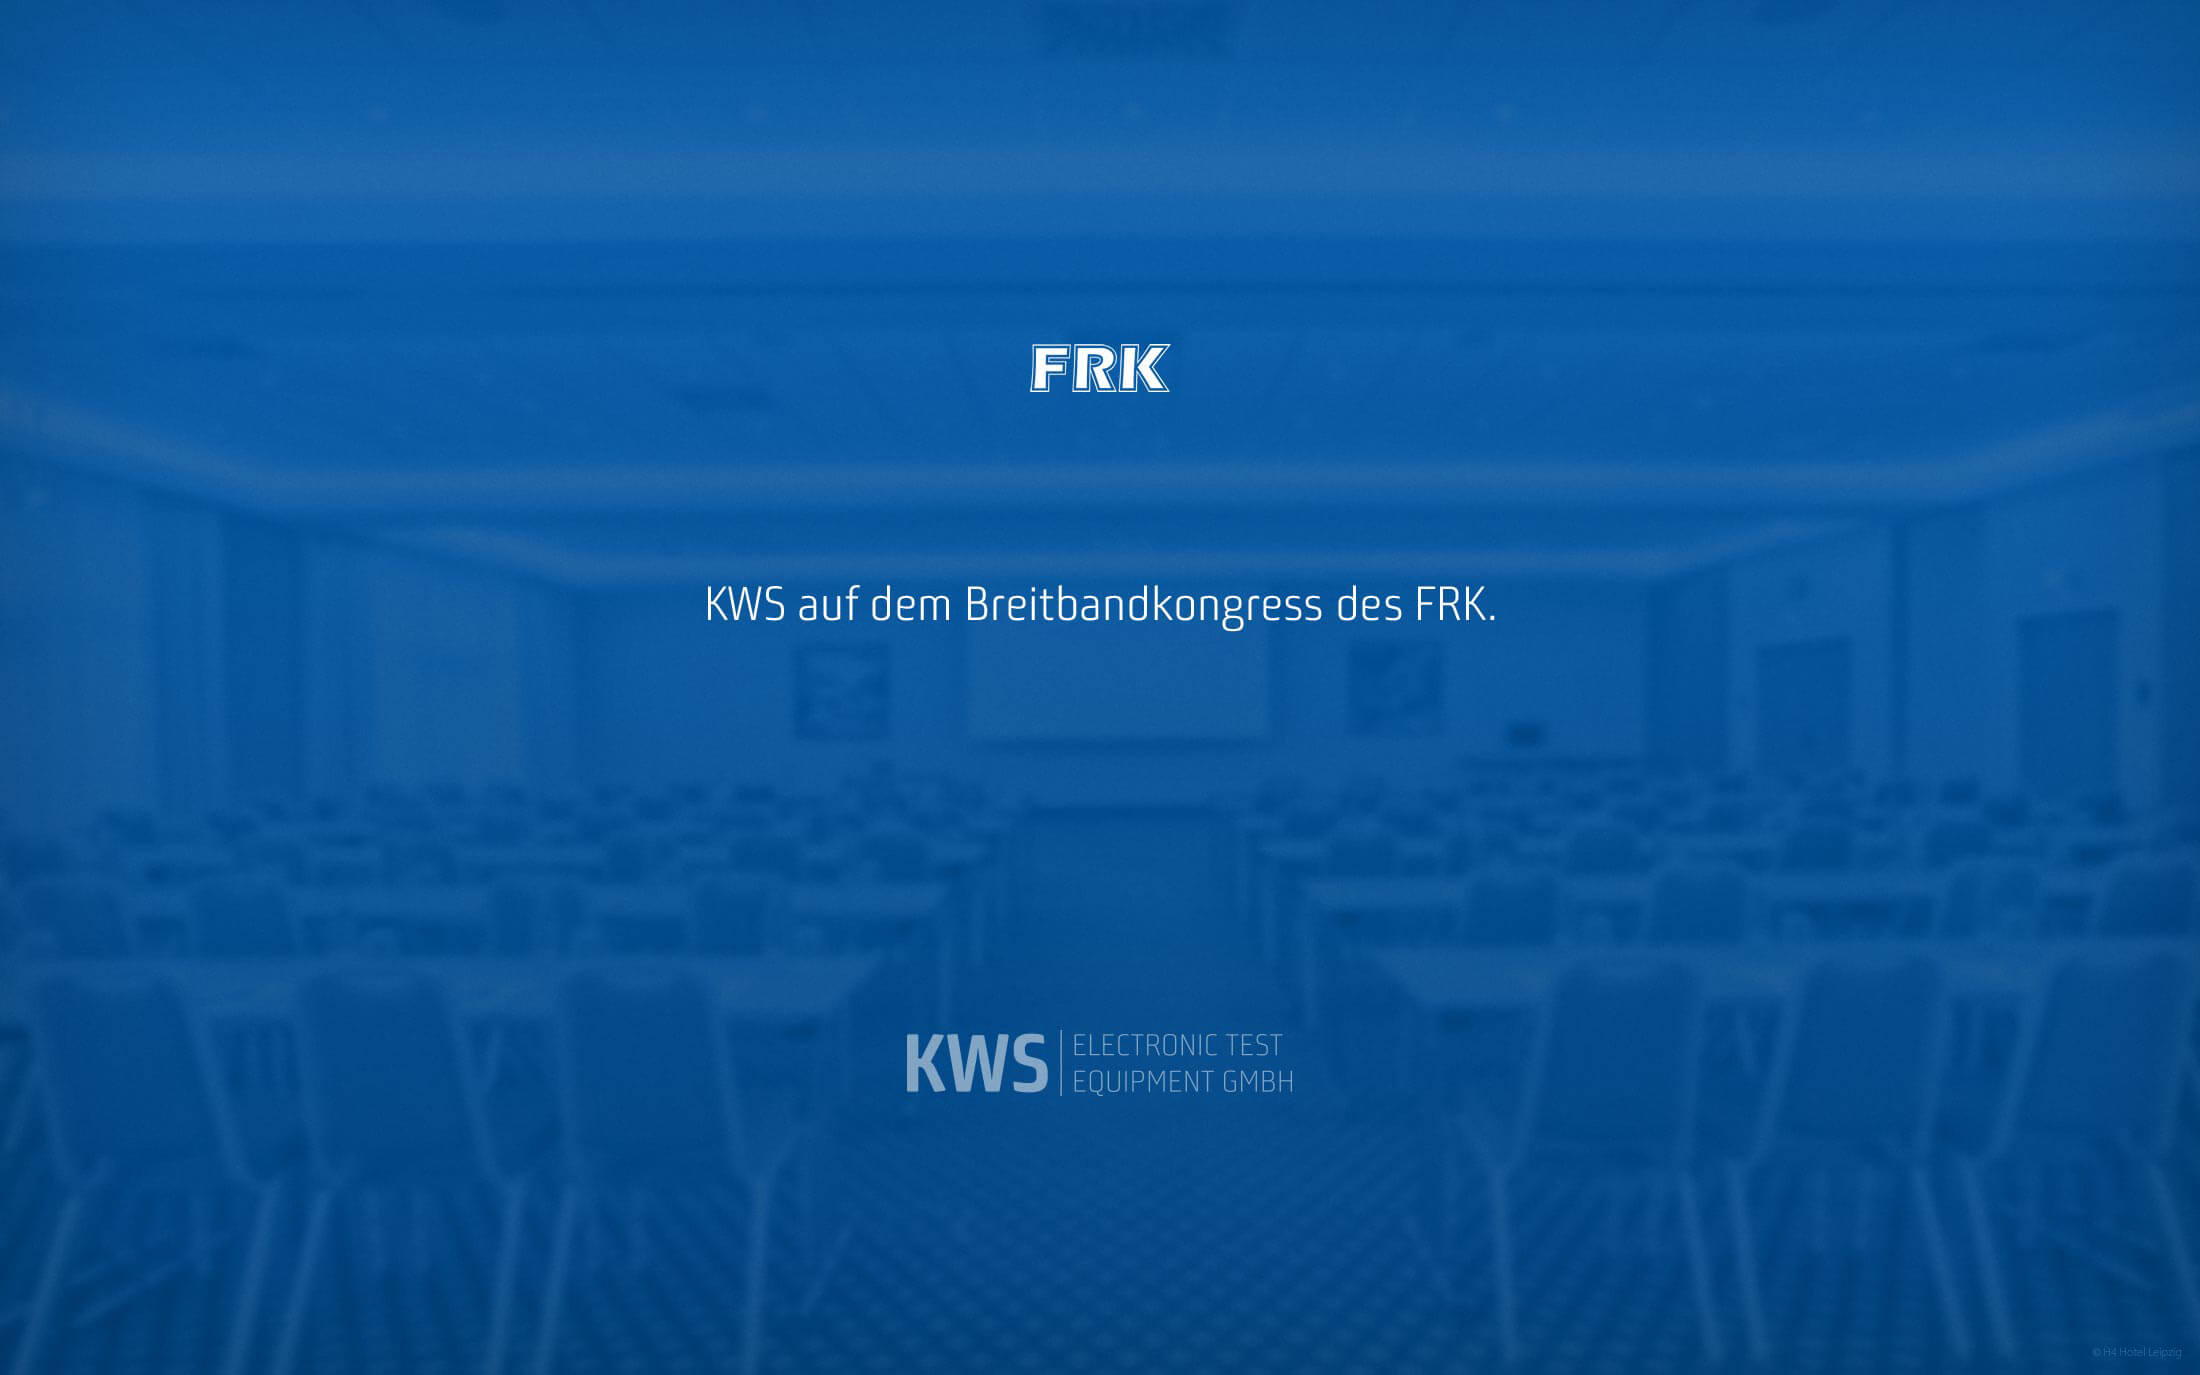 KWS Electronic News 2020: KWS auf dem Breitbandkongress des FRK